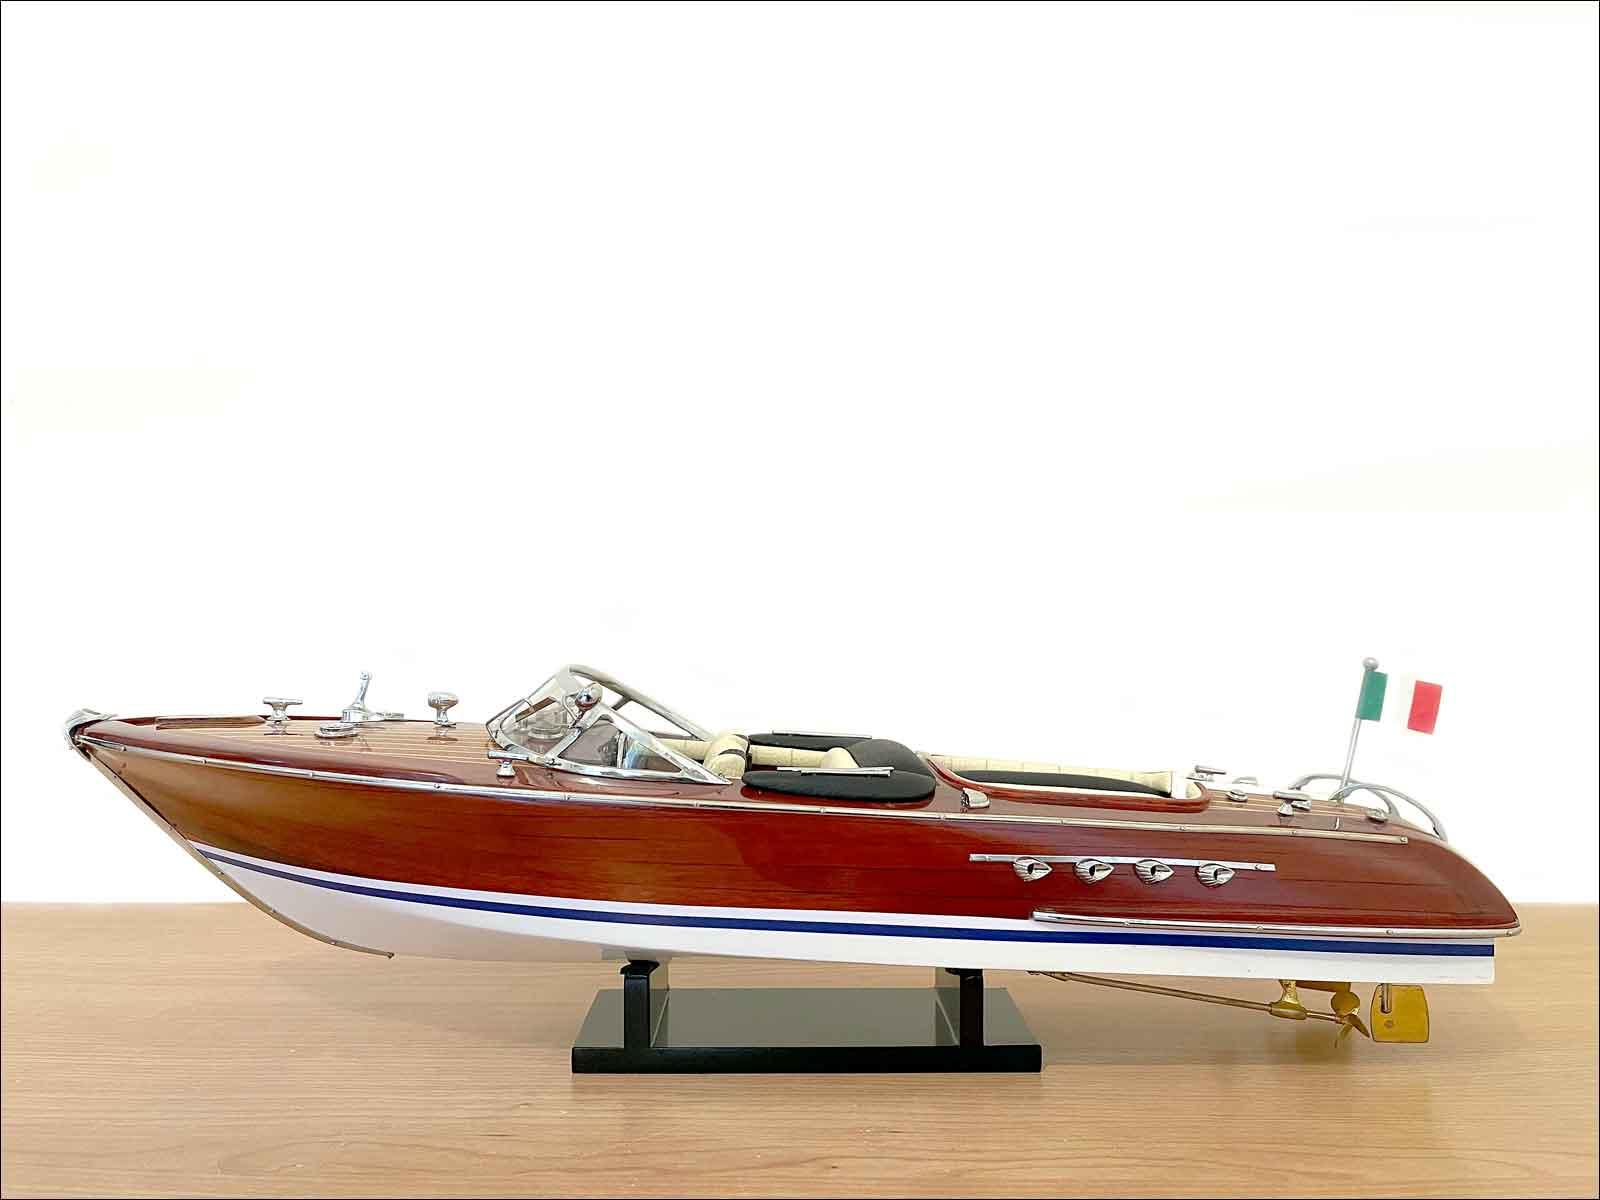 fully built Riva Aquarama yacht model